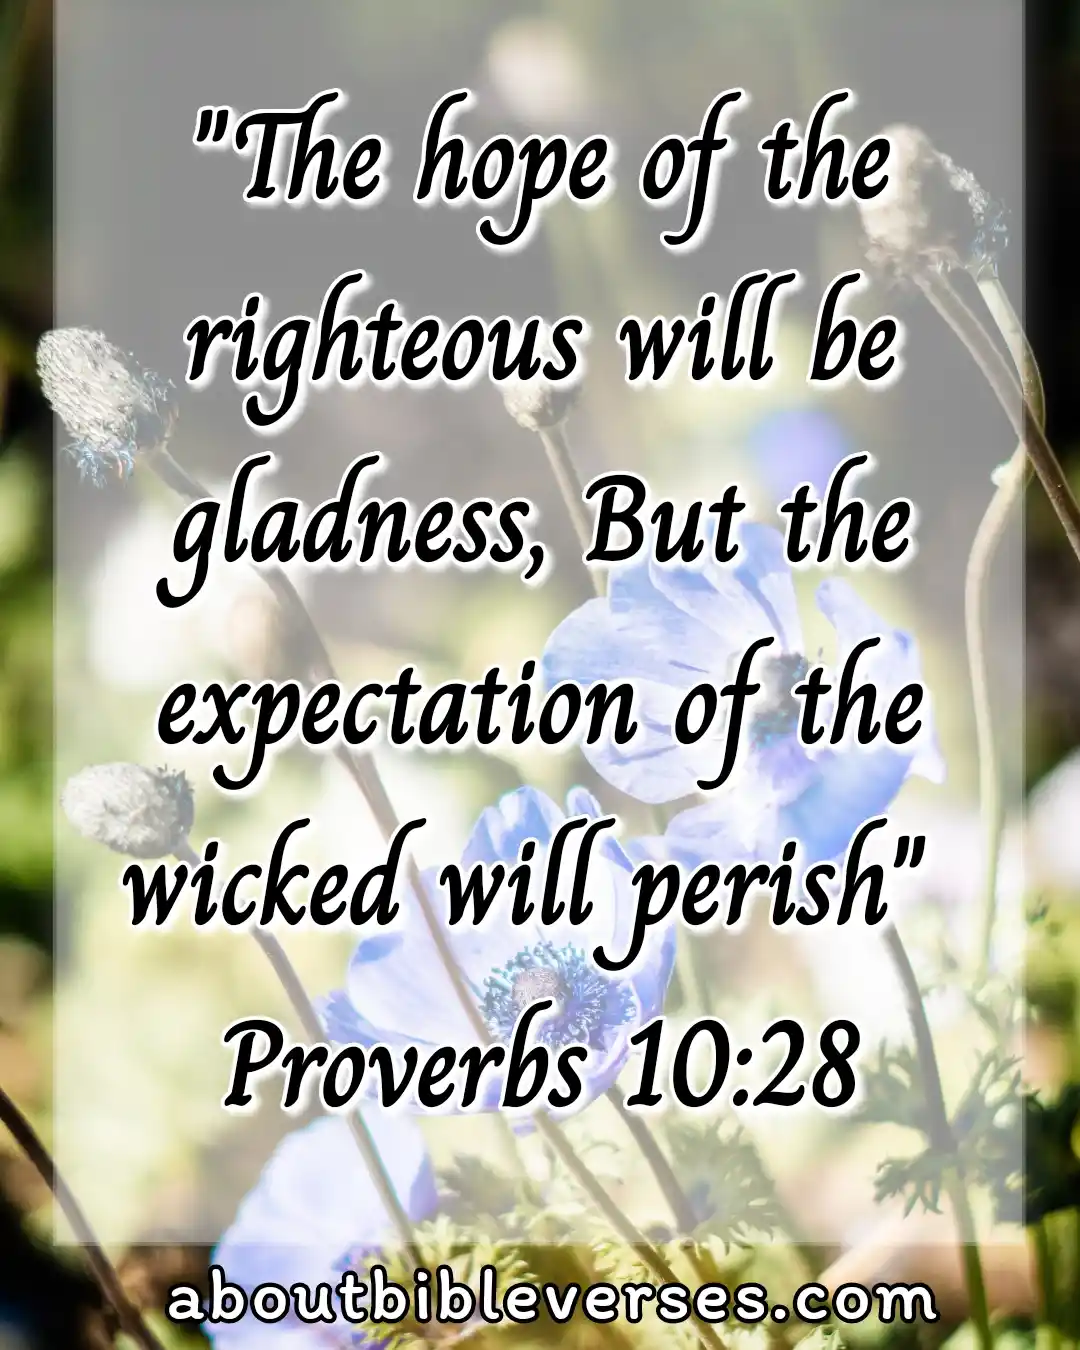 Today bible verse (Proverbs 10:28)